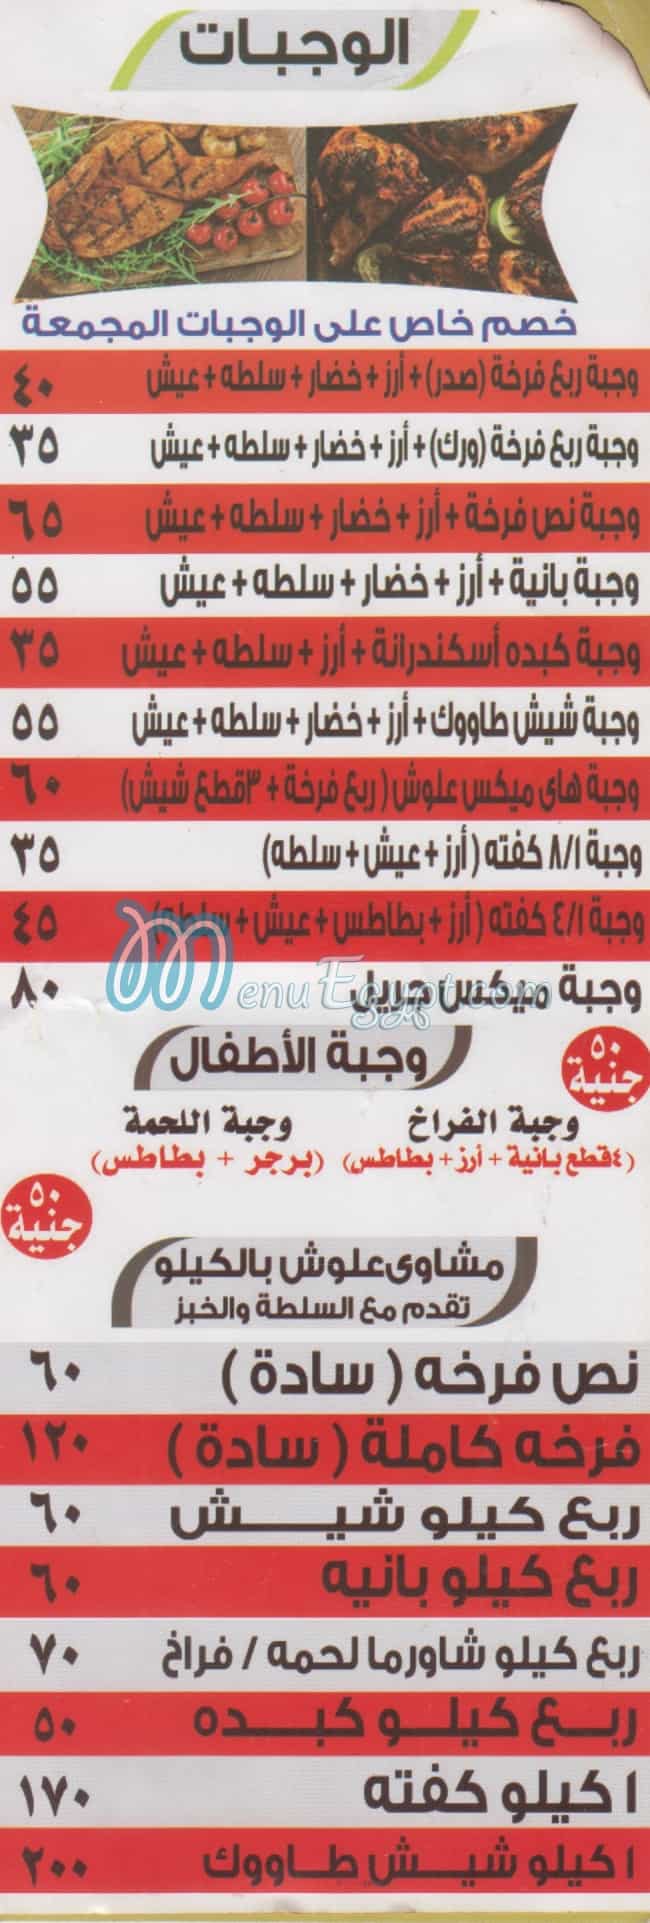 Aloush Hadayek El Ahram online menu